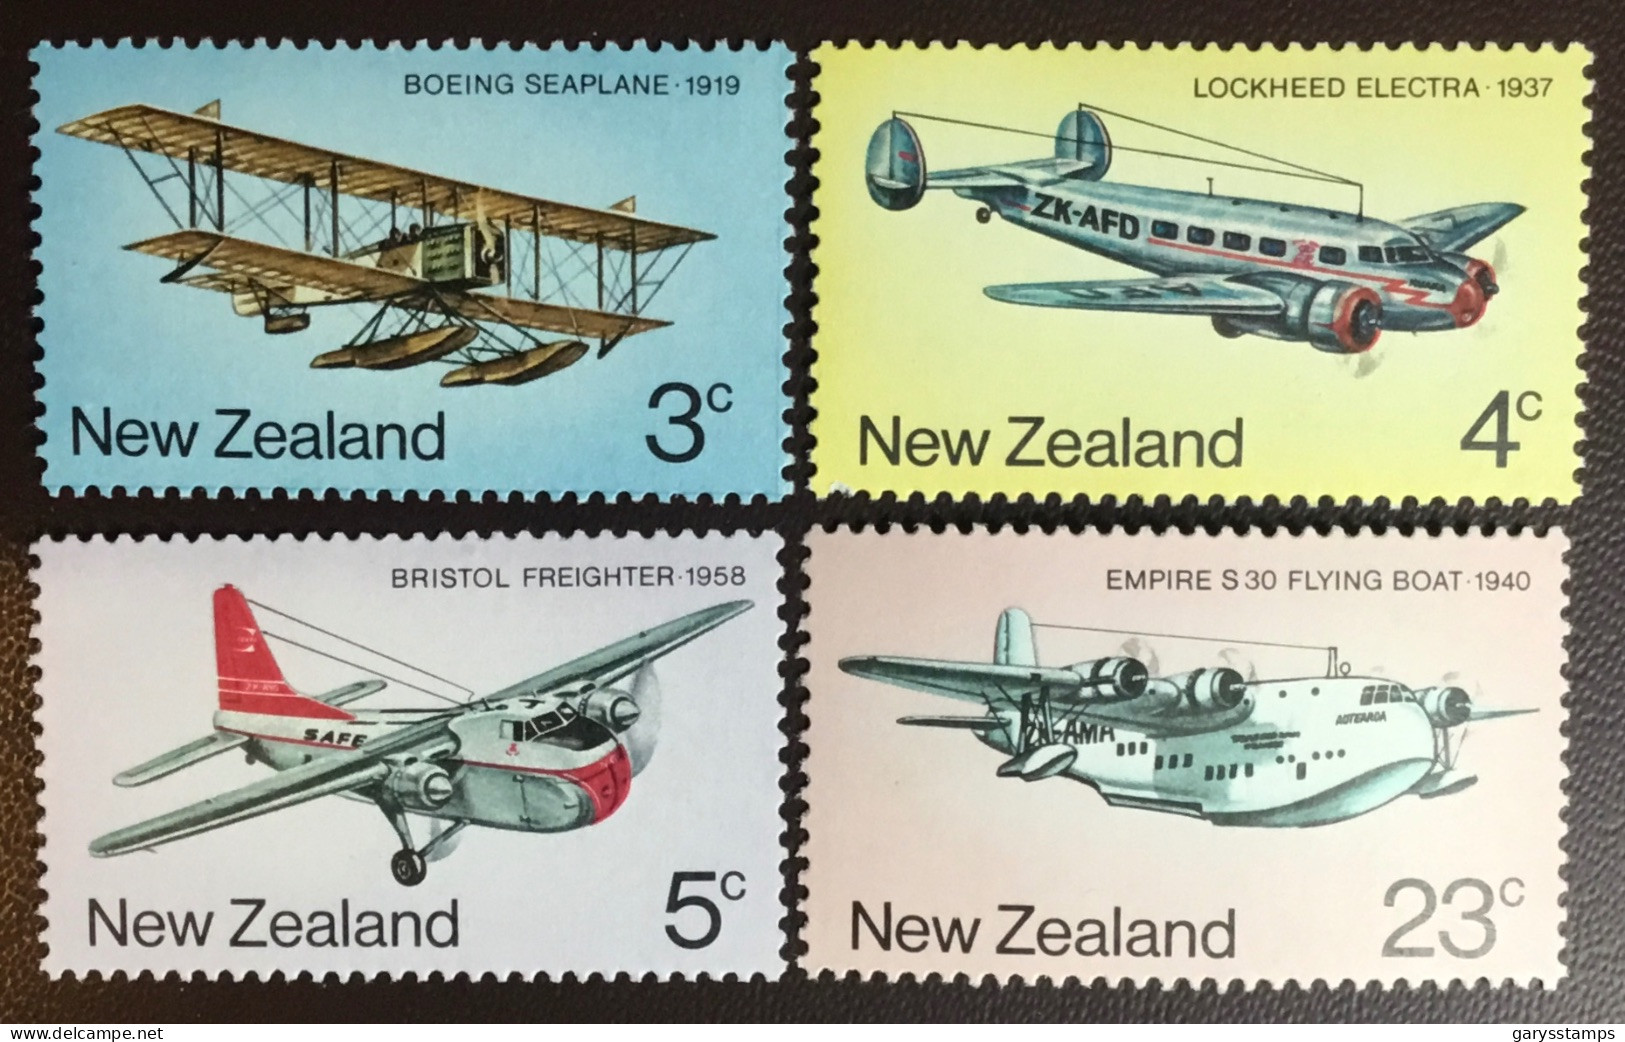 New Zealand 1974 Airplanes Aircraft MNH - Nuevos